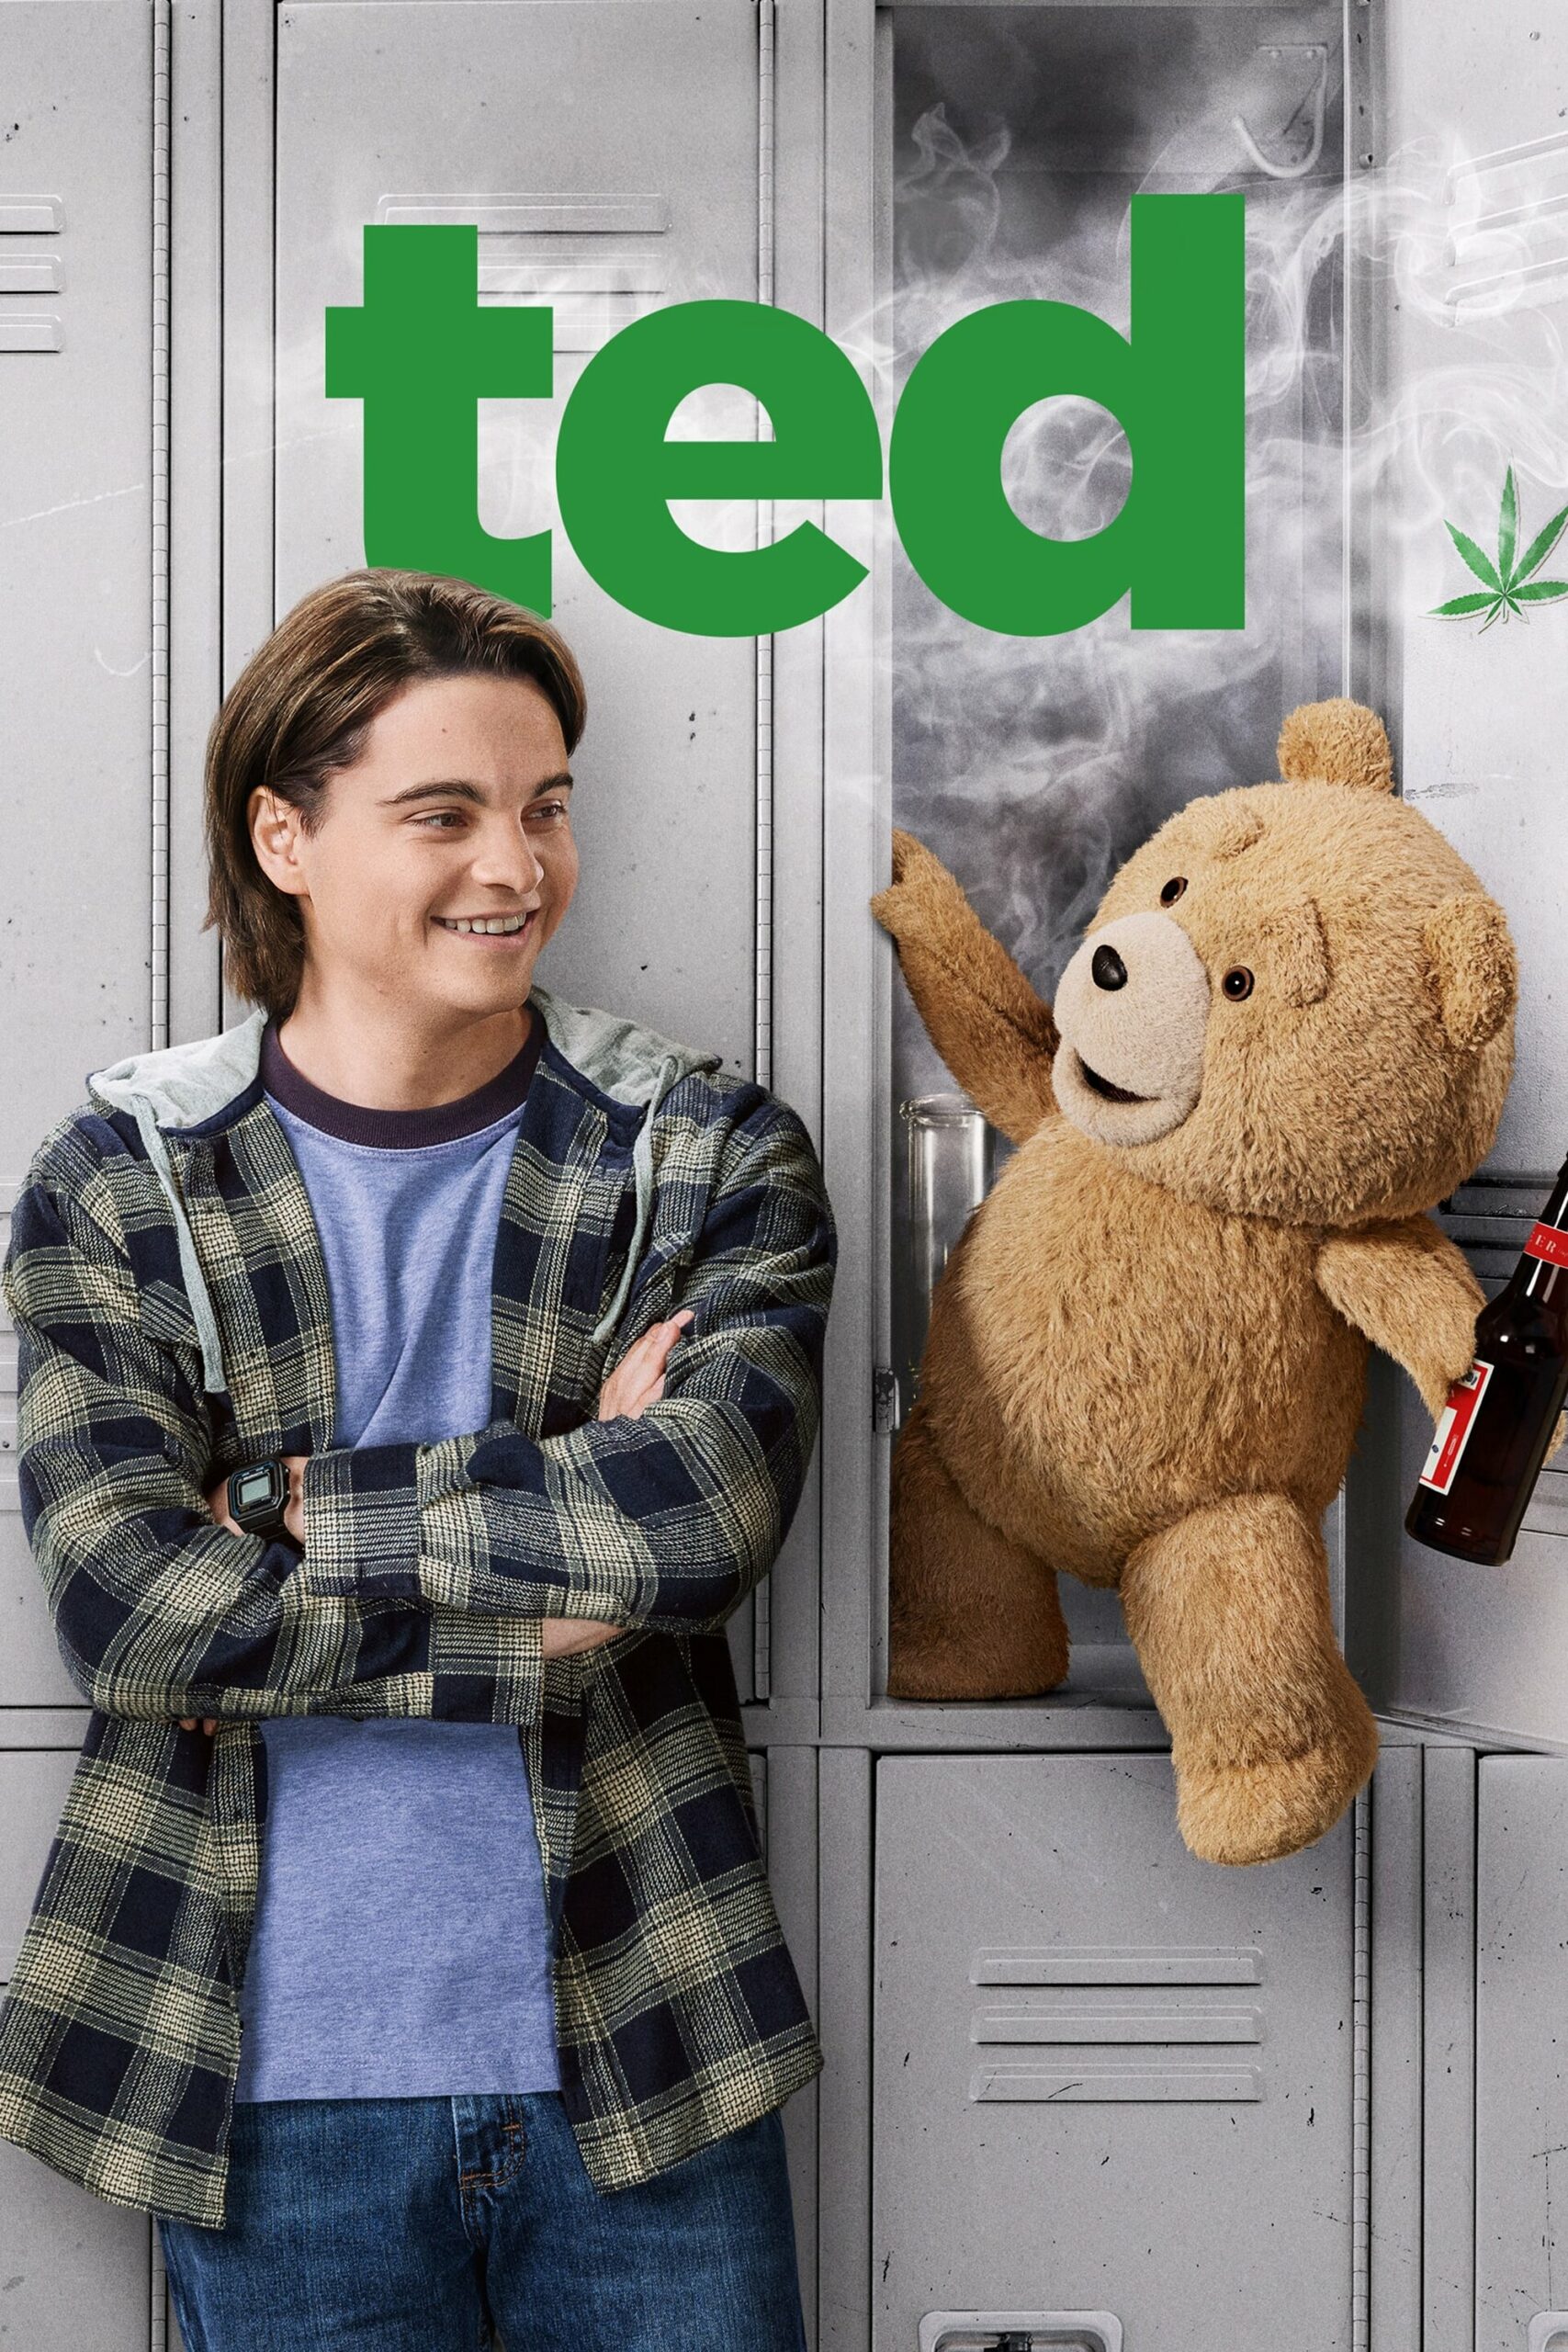 Plakát pro film “Ted”